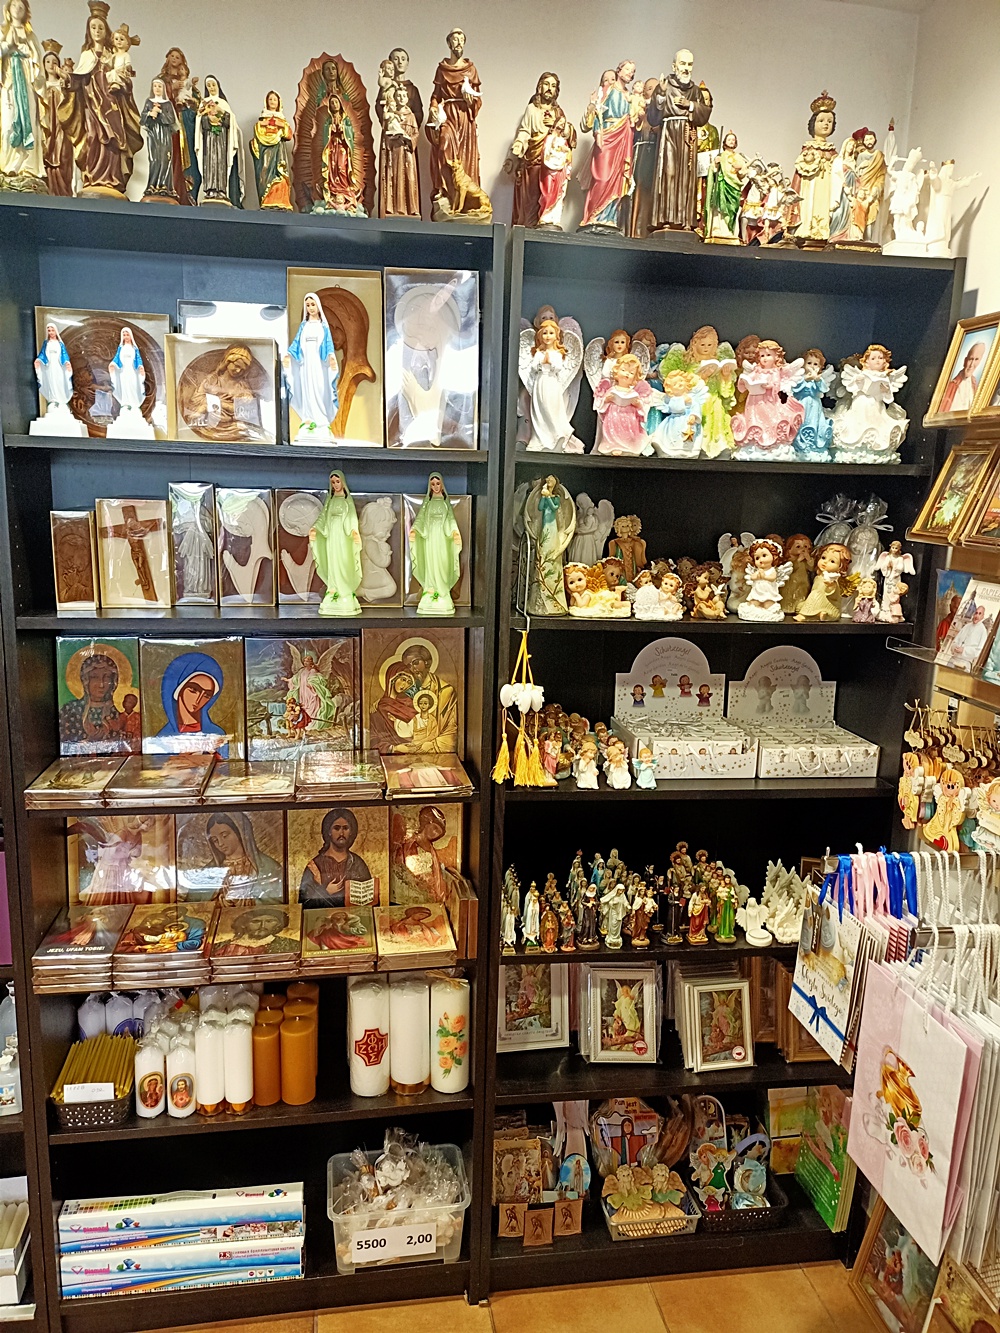 dewocjonalia,figurki religijne,figury Maryi,pamiątki religijne,dewocjonalia